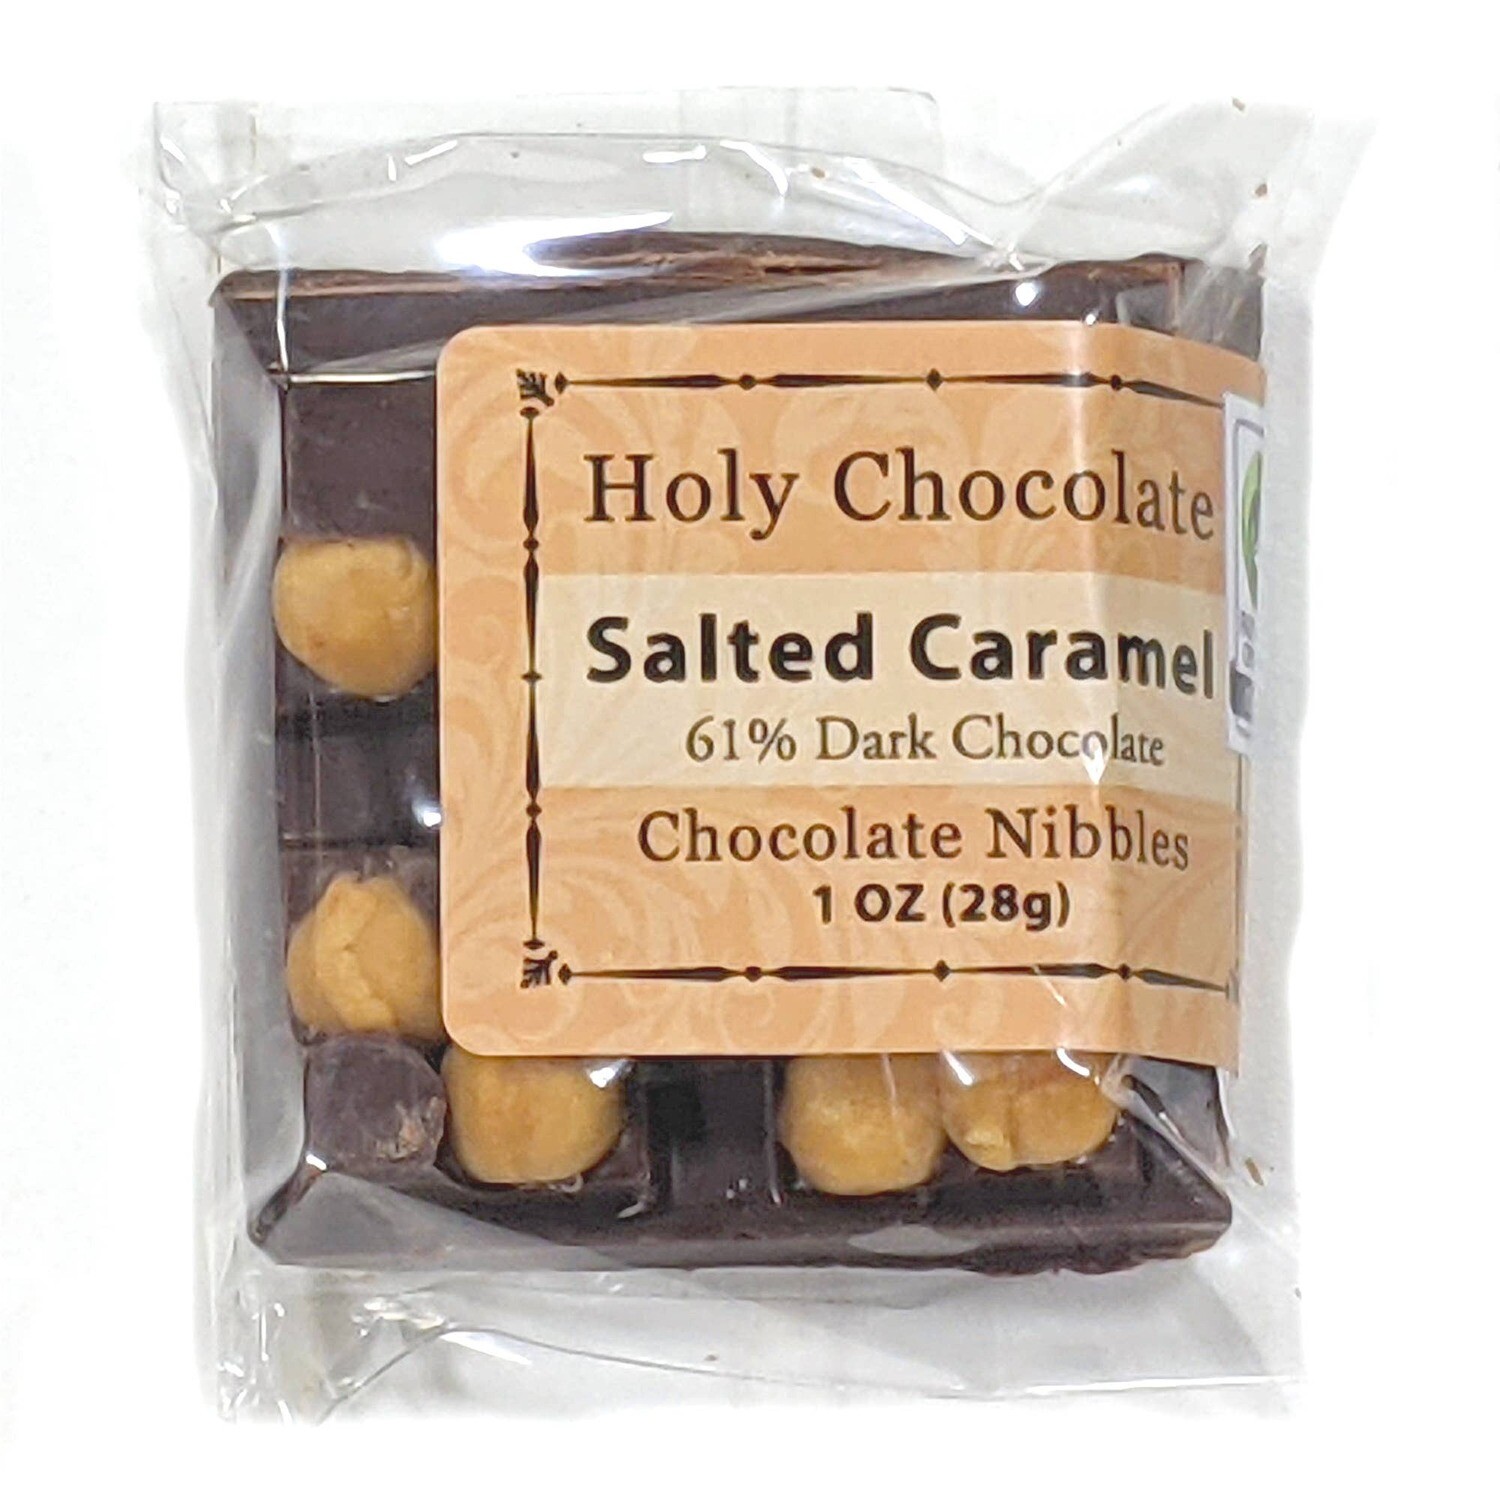 Salted Caramel Holy Chocolate